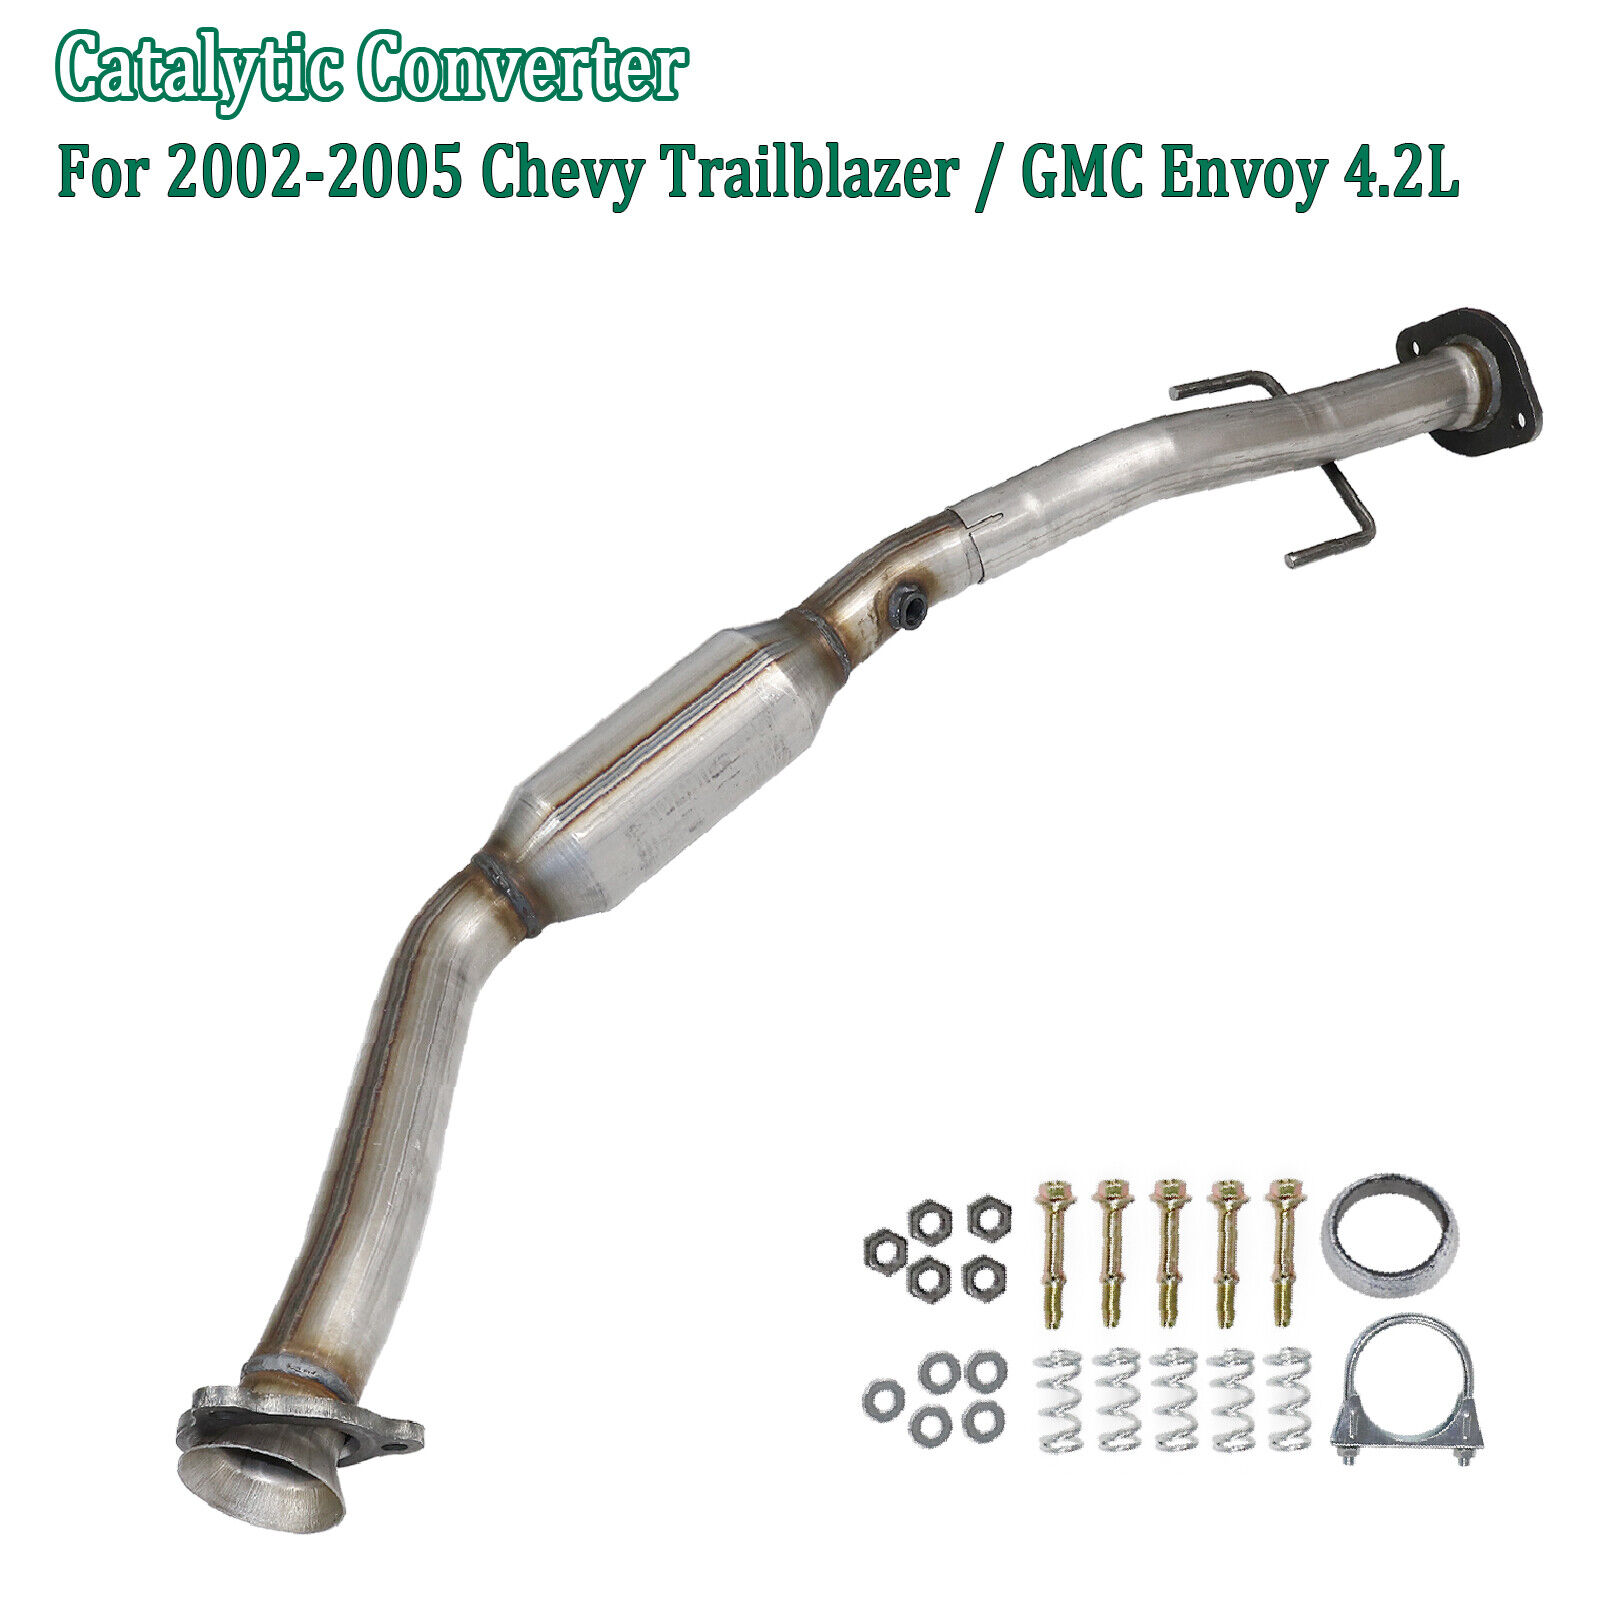 Fit 2002-2005 Chevy Trailblazer GMC Envoy 4.2L Catalytic Converter Direct Fit